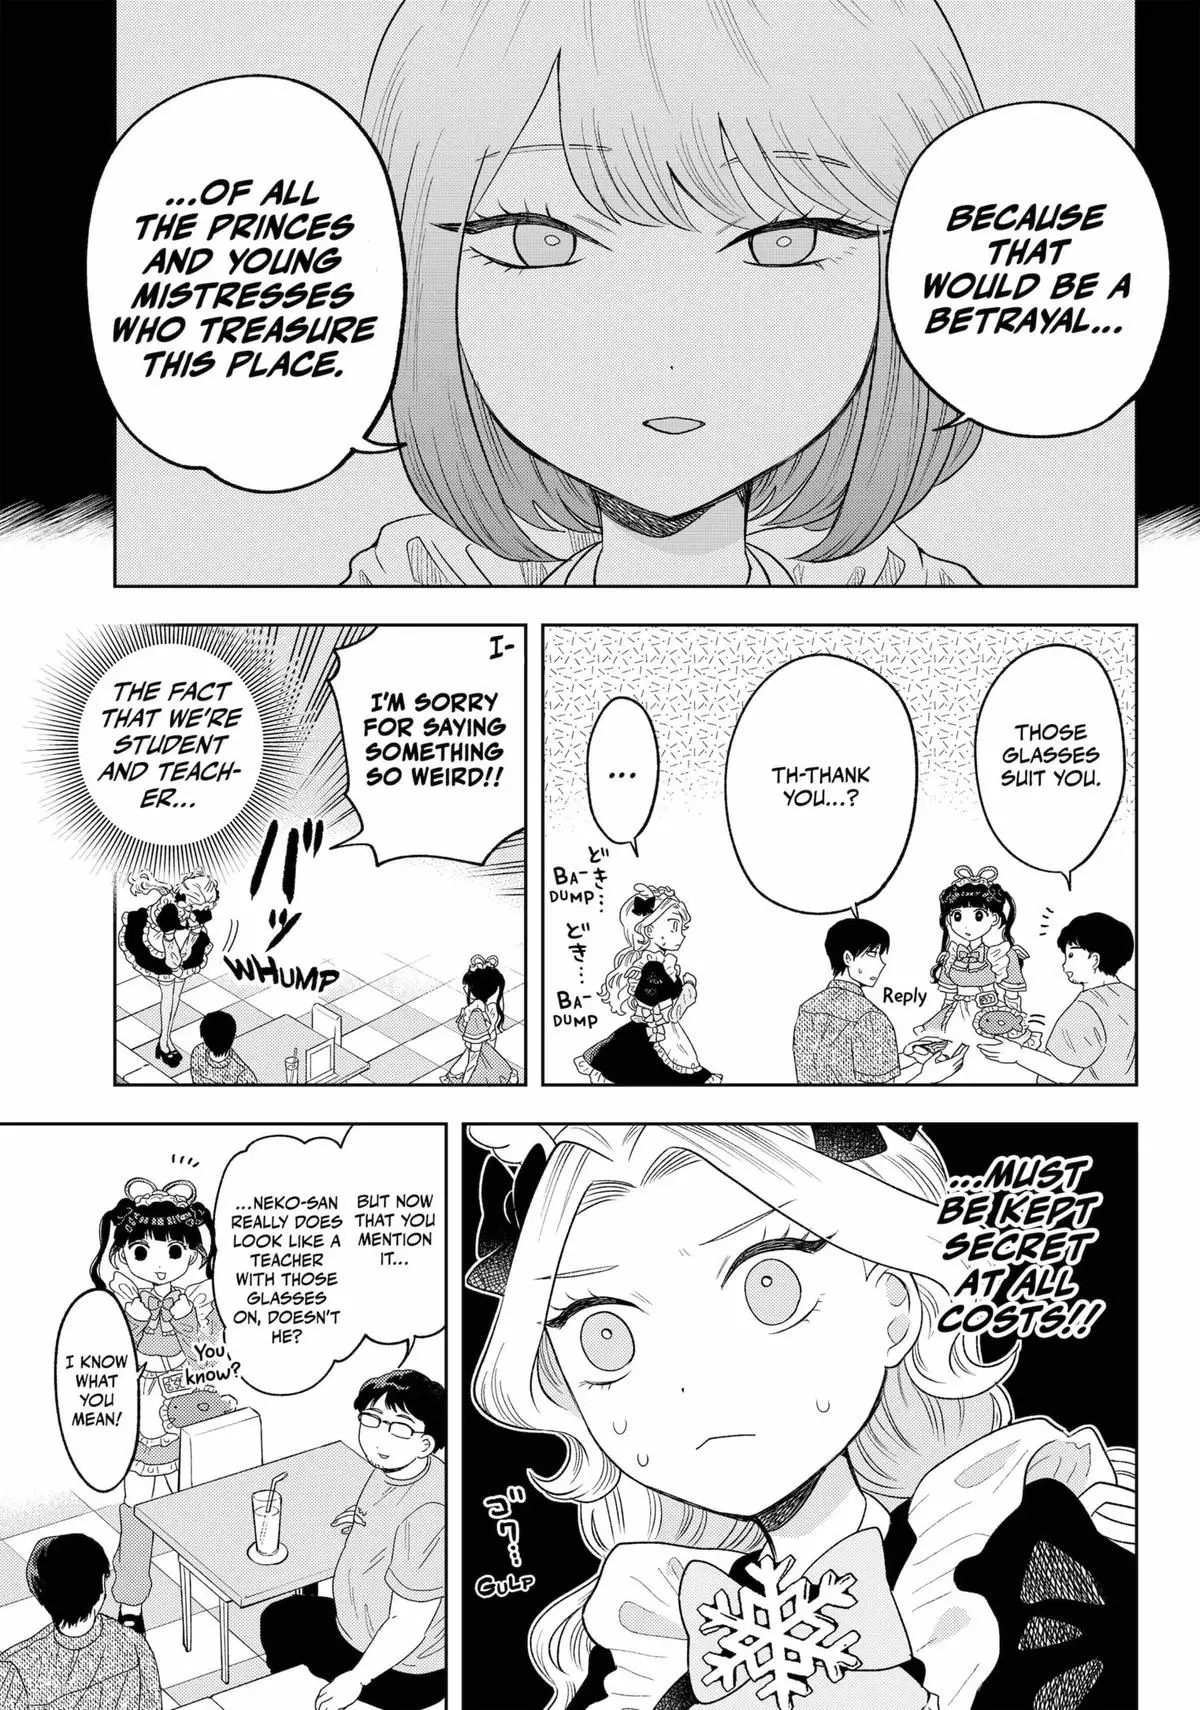 Tsuruko Returns The Favor - 12 page 5-e71ee4e6